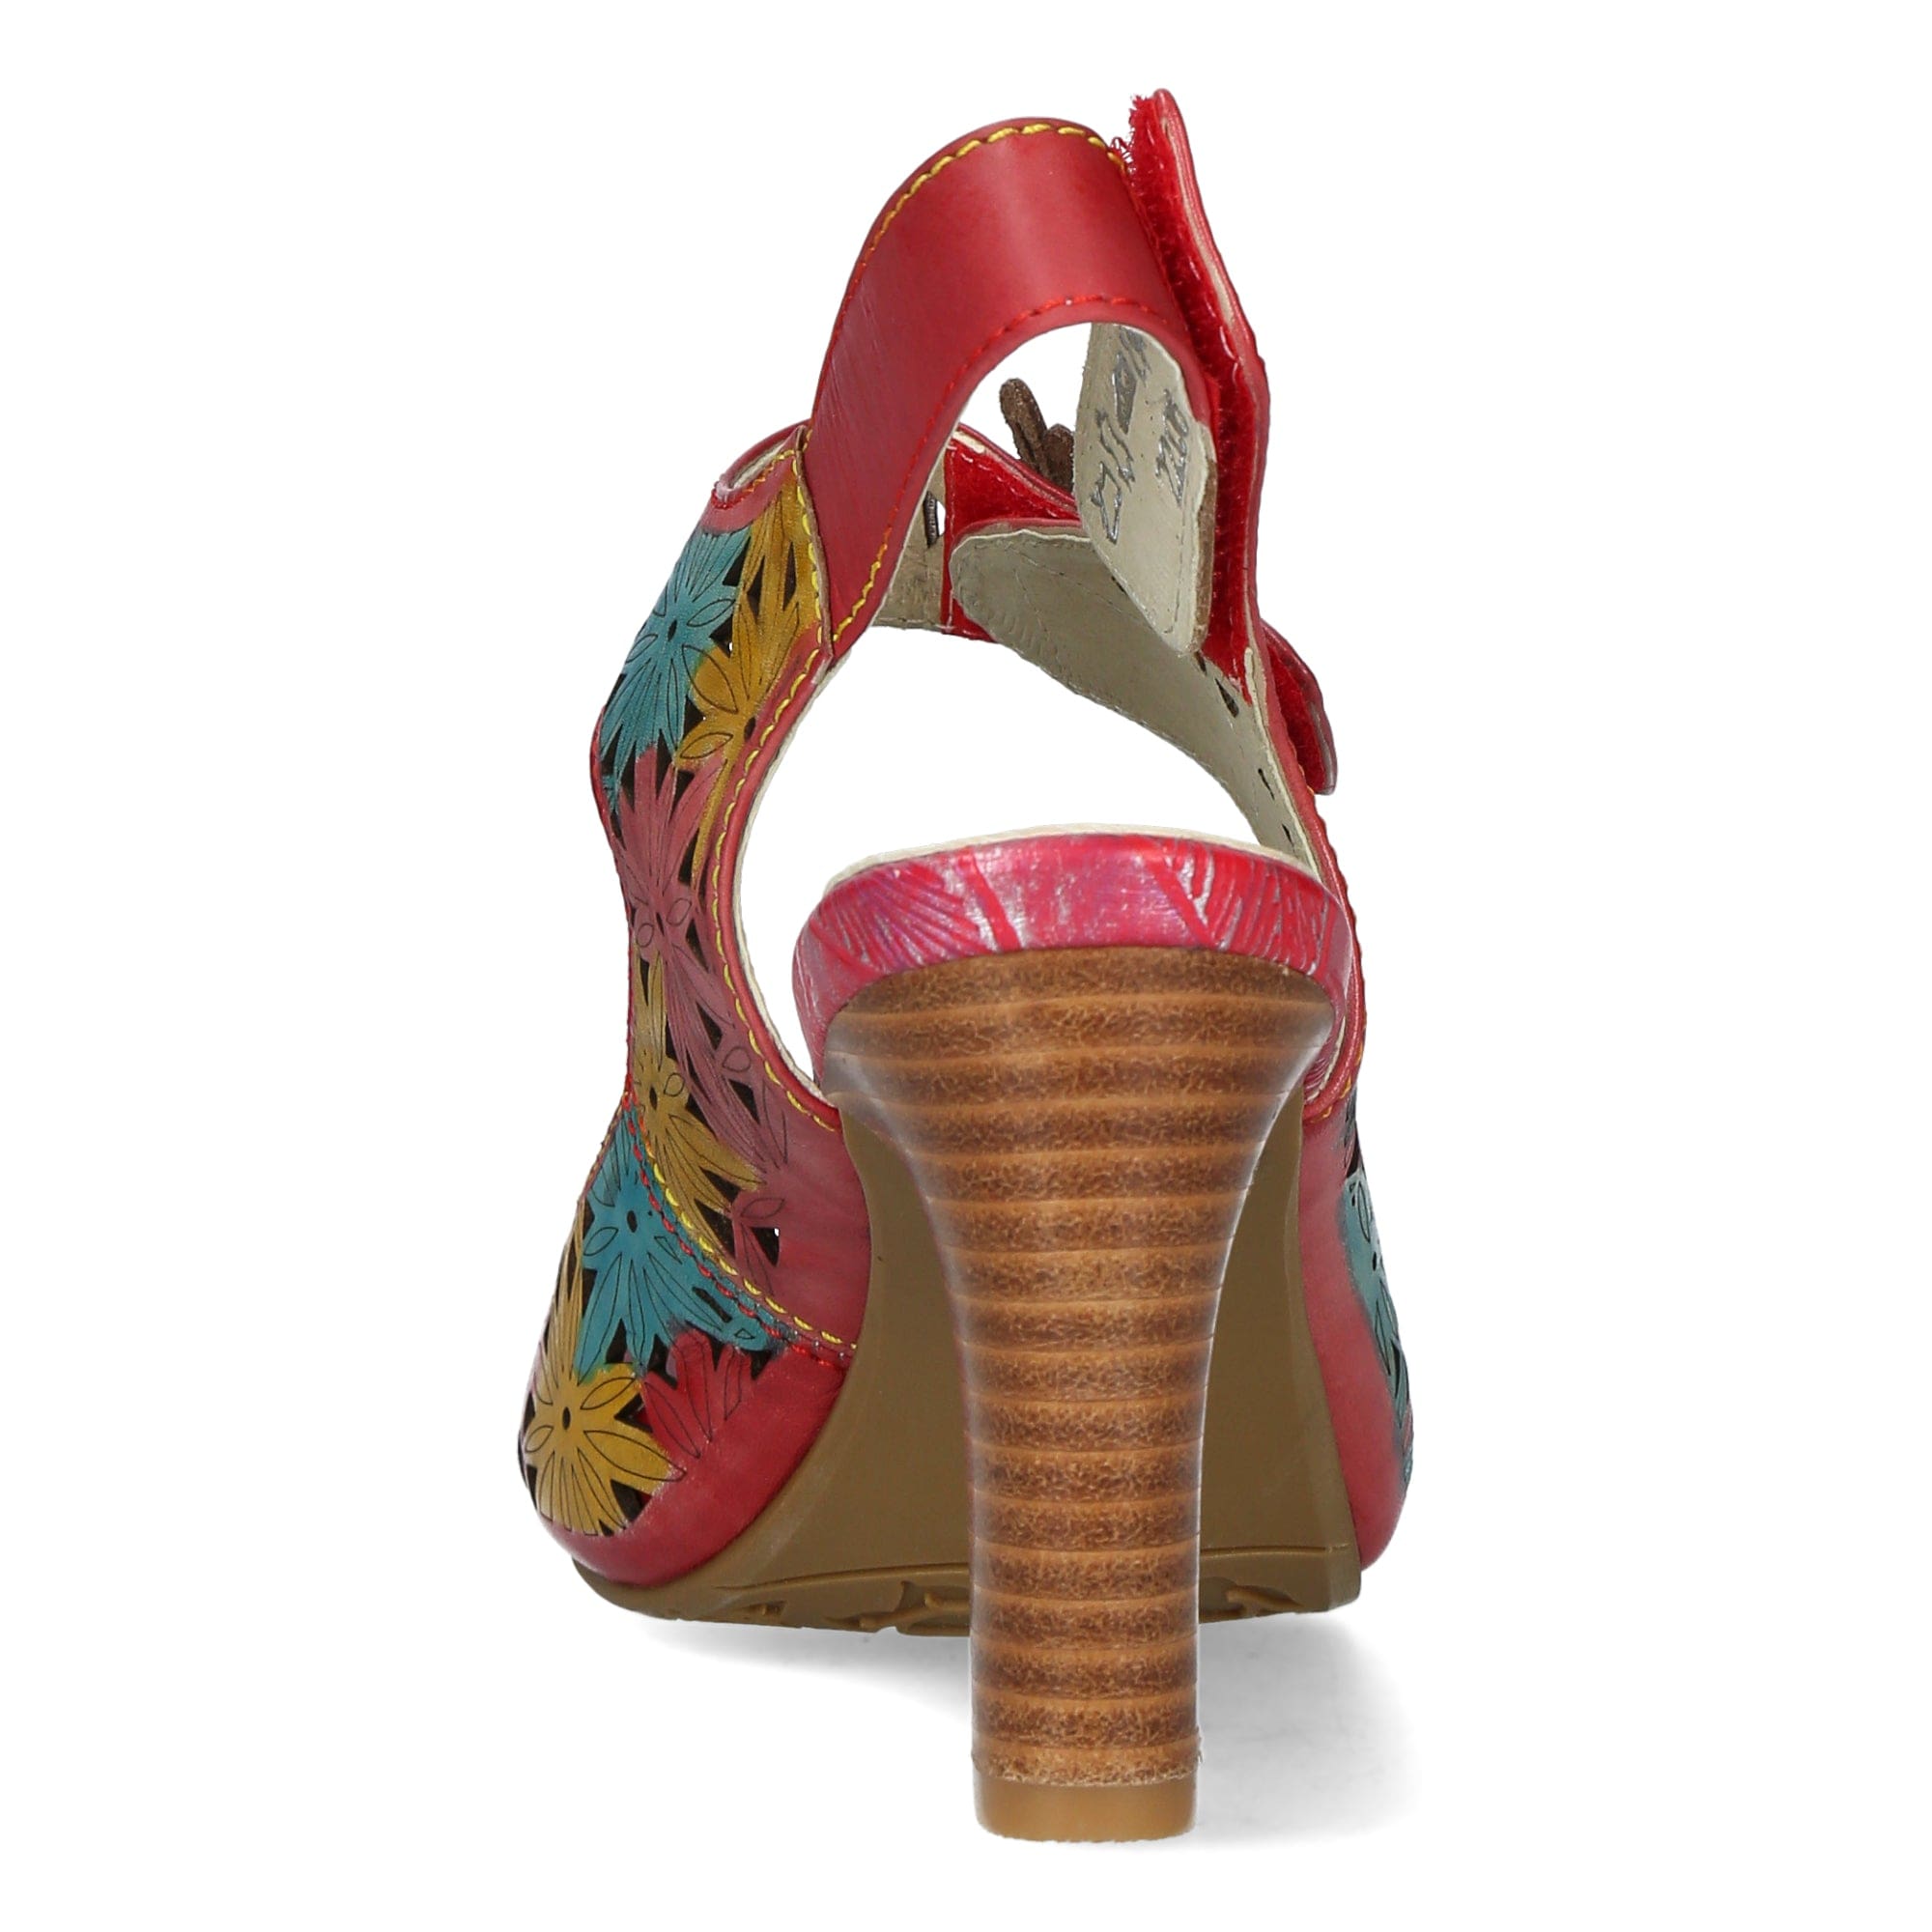 Shoe ALCBANEO 6023 - Sandal